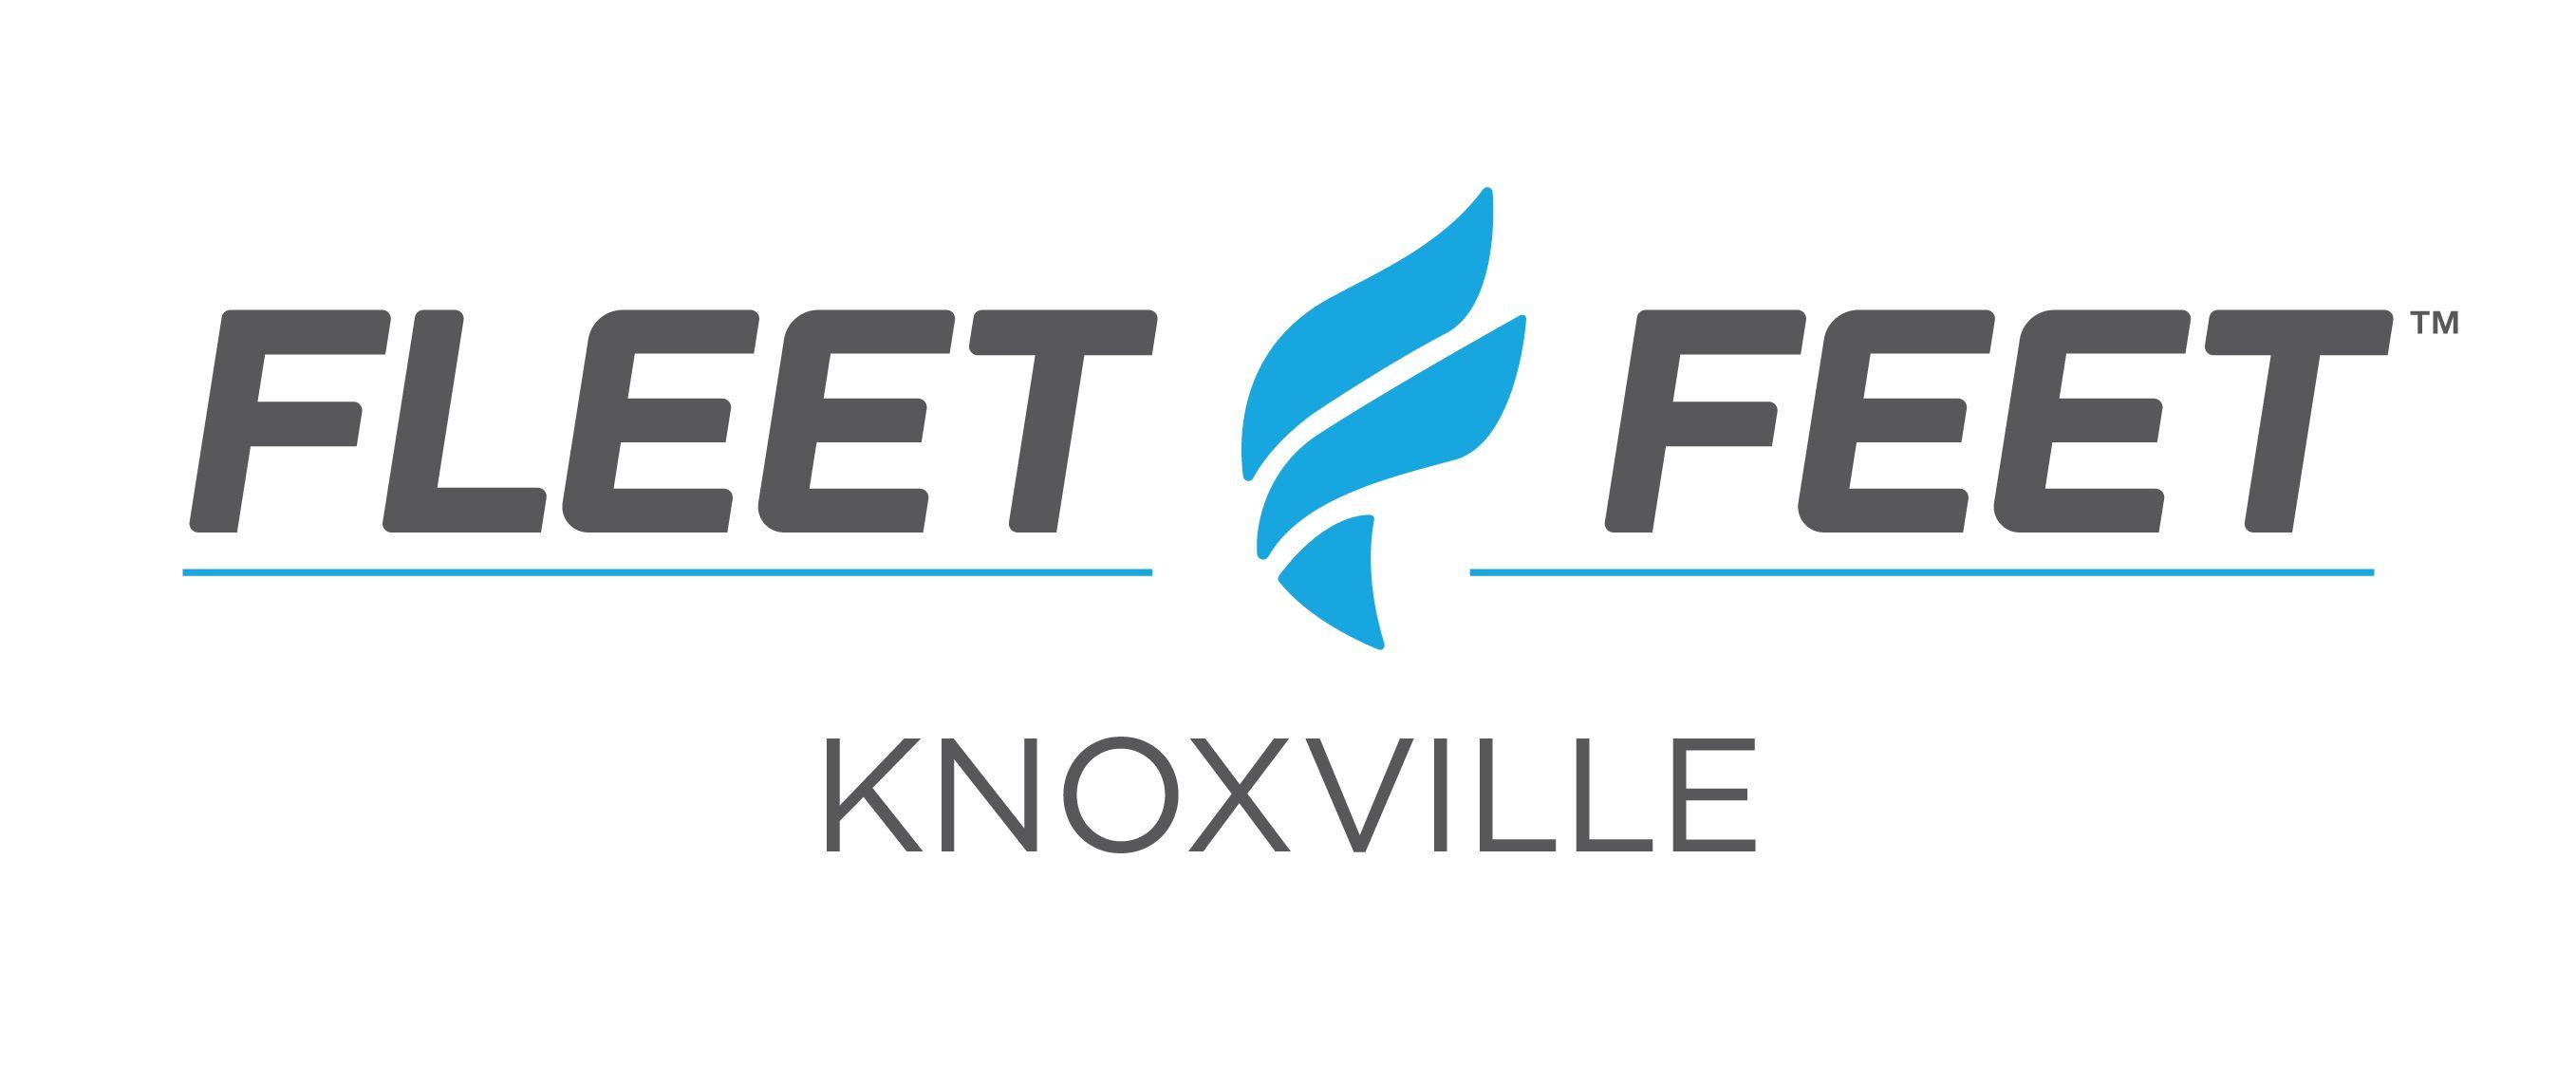 Knoxville Logo - Fleet Feet Knoxville